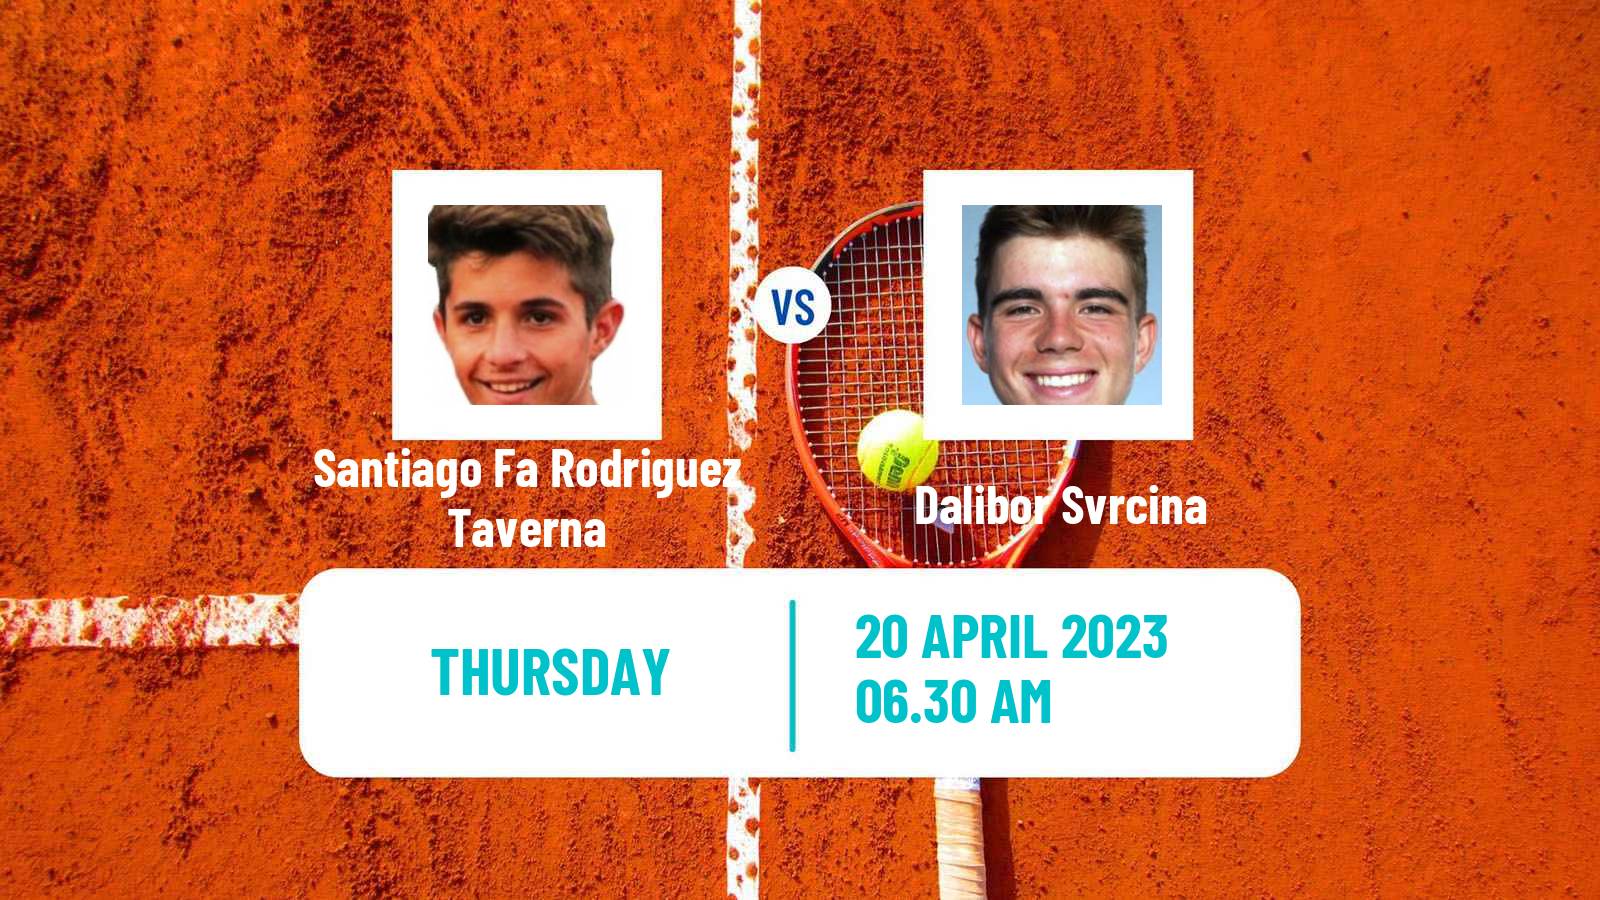 Tennis ATP Challenger Santiago Fa Rodriguez Taverna - Dalibor Svrcina